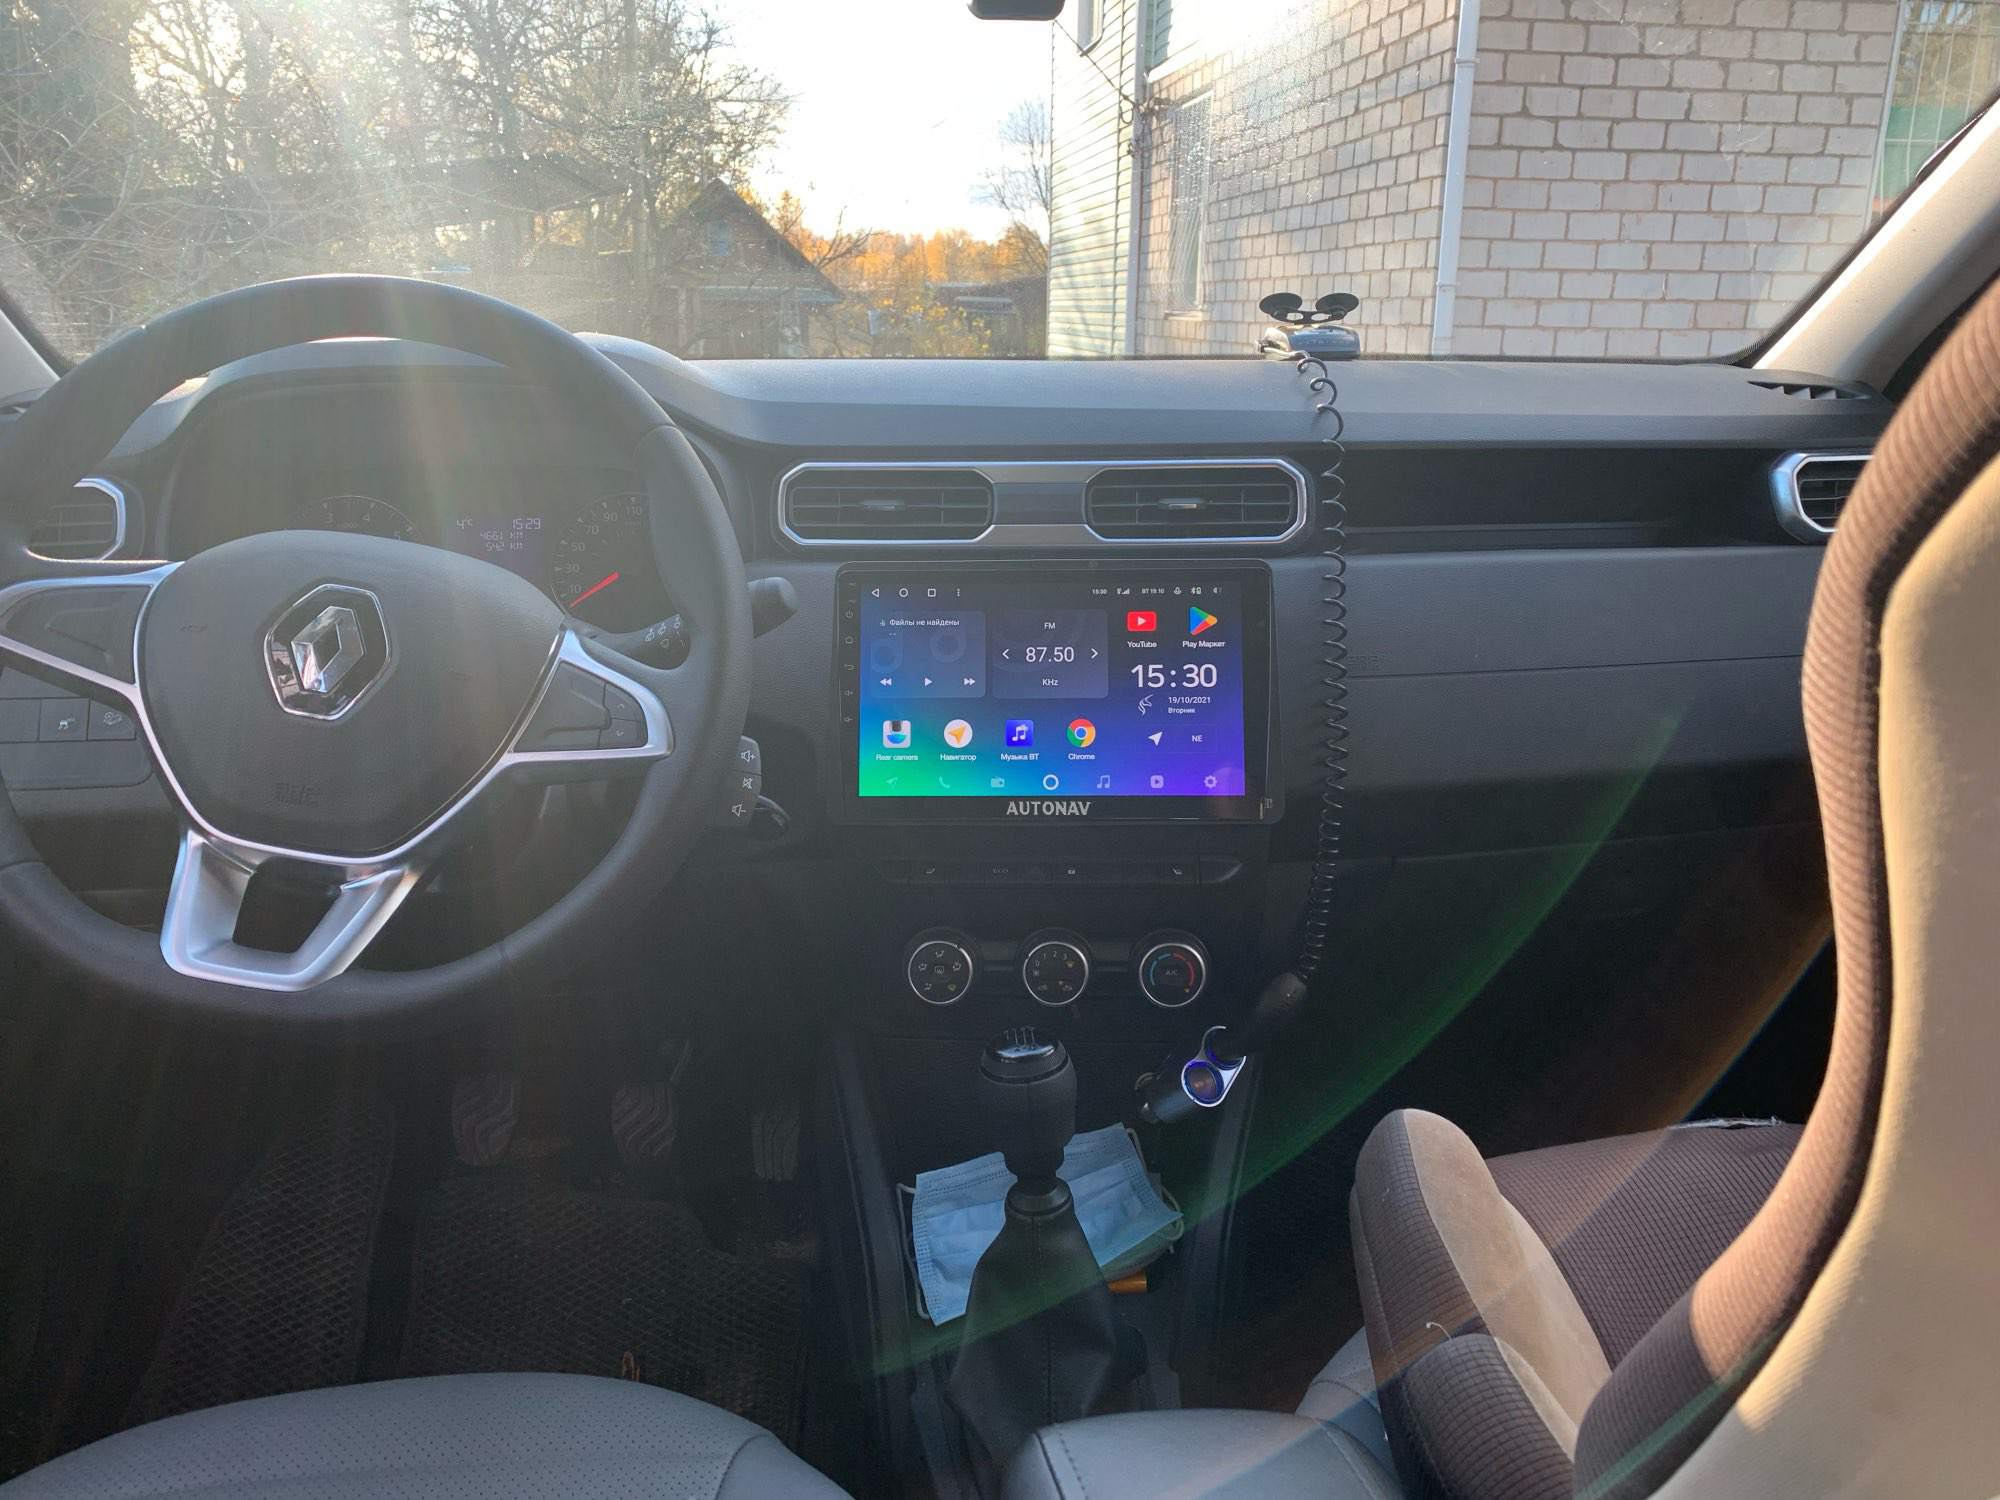 Navigatie AUTONAV Android GPS Dedicata Dacia Duster Dupa 2020, Model Classic, Memorie 128GB Stocare, 6GB DDR3 RAM, Display 10" Full-Touch, WiFi, 2 x USB, Bluetooth, 4G, Octa-Core 8 * 1.3GHz, 4 * 50W Audio